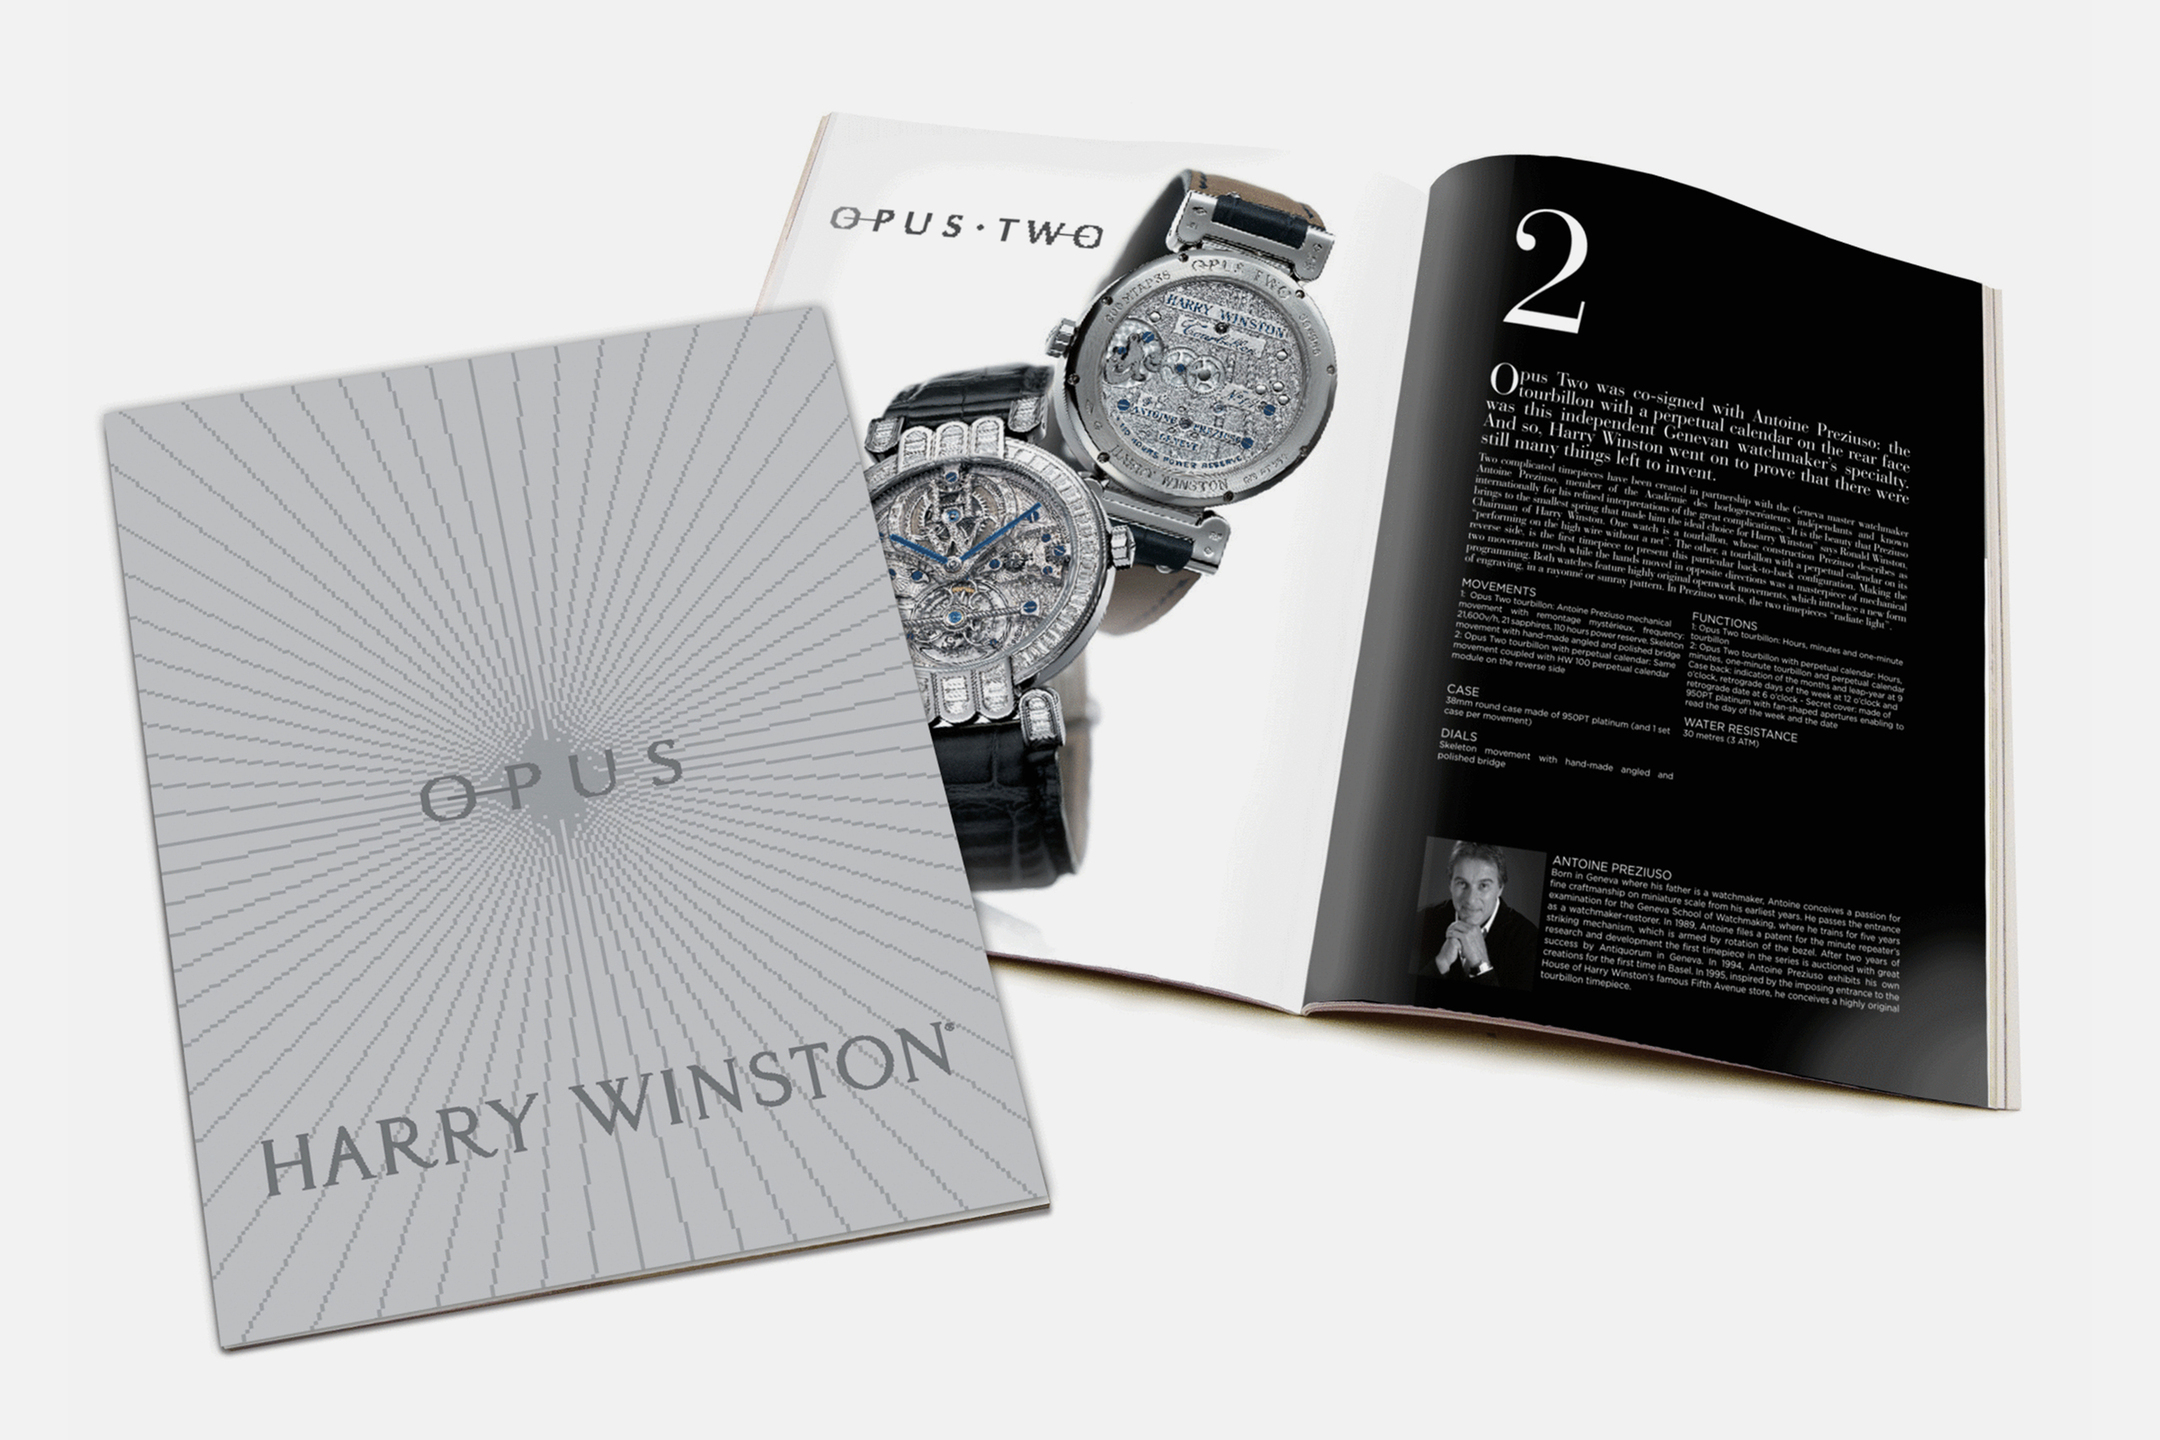 Harry Winston Opus Brochure